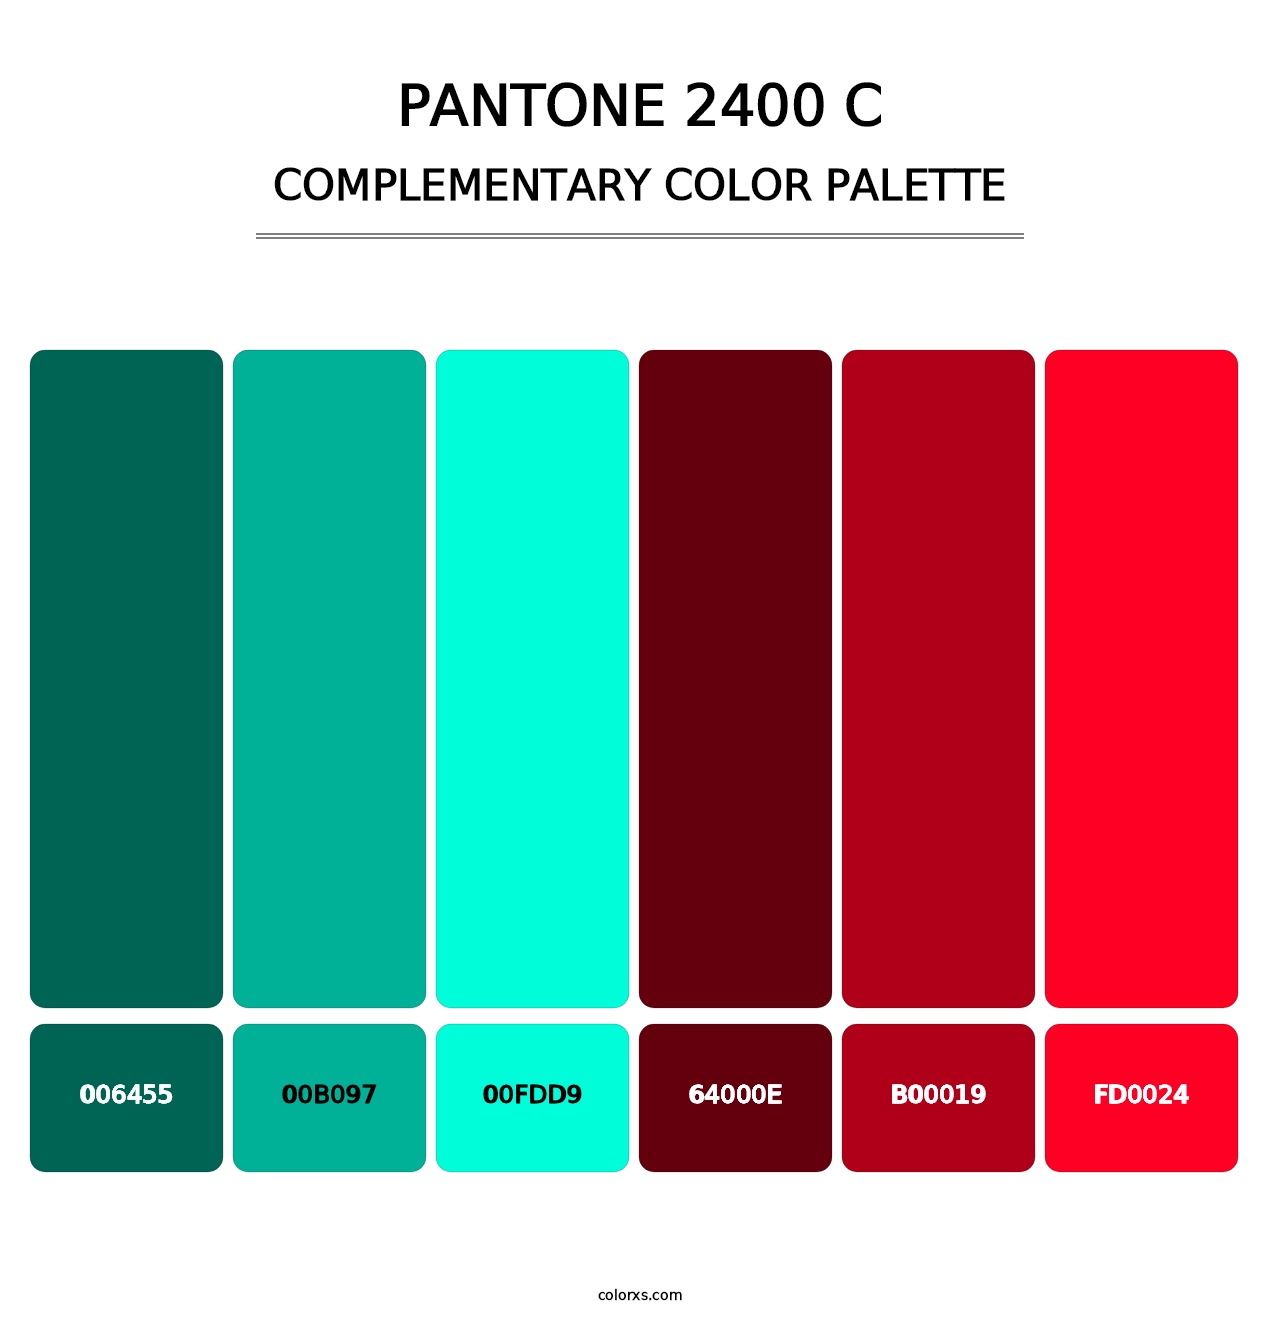 PANTONE 2400 C - Complementary Color Palette